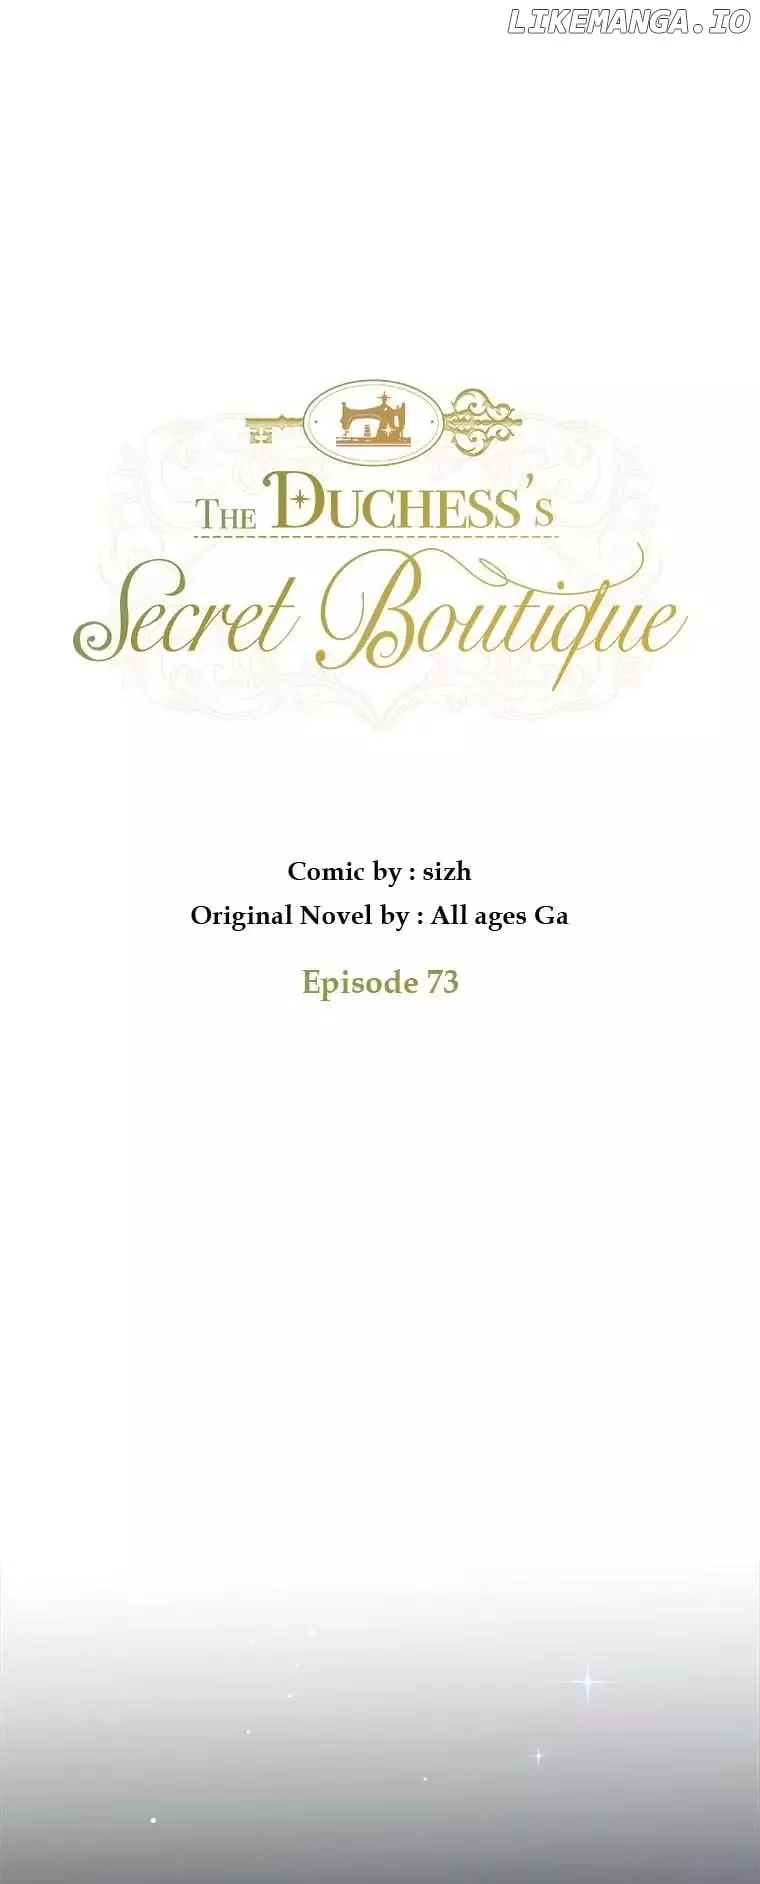 The Duchess’S Secret Dressing Room - 73 page 10-ae8cf181